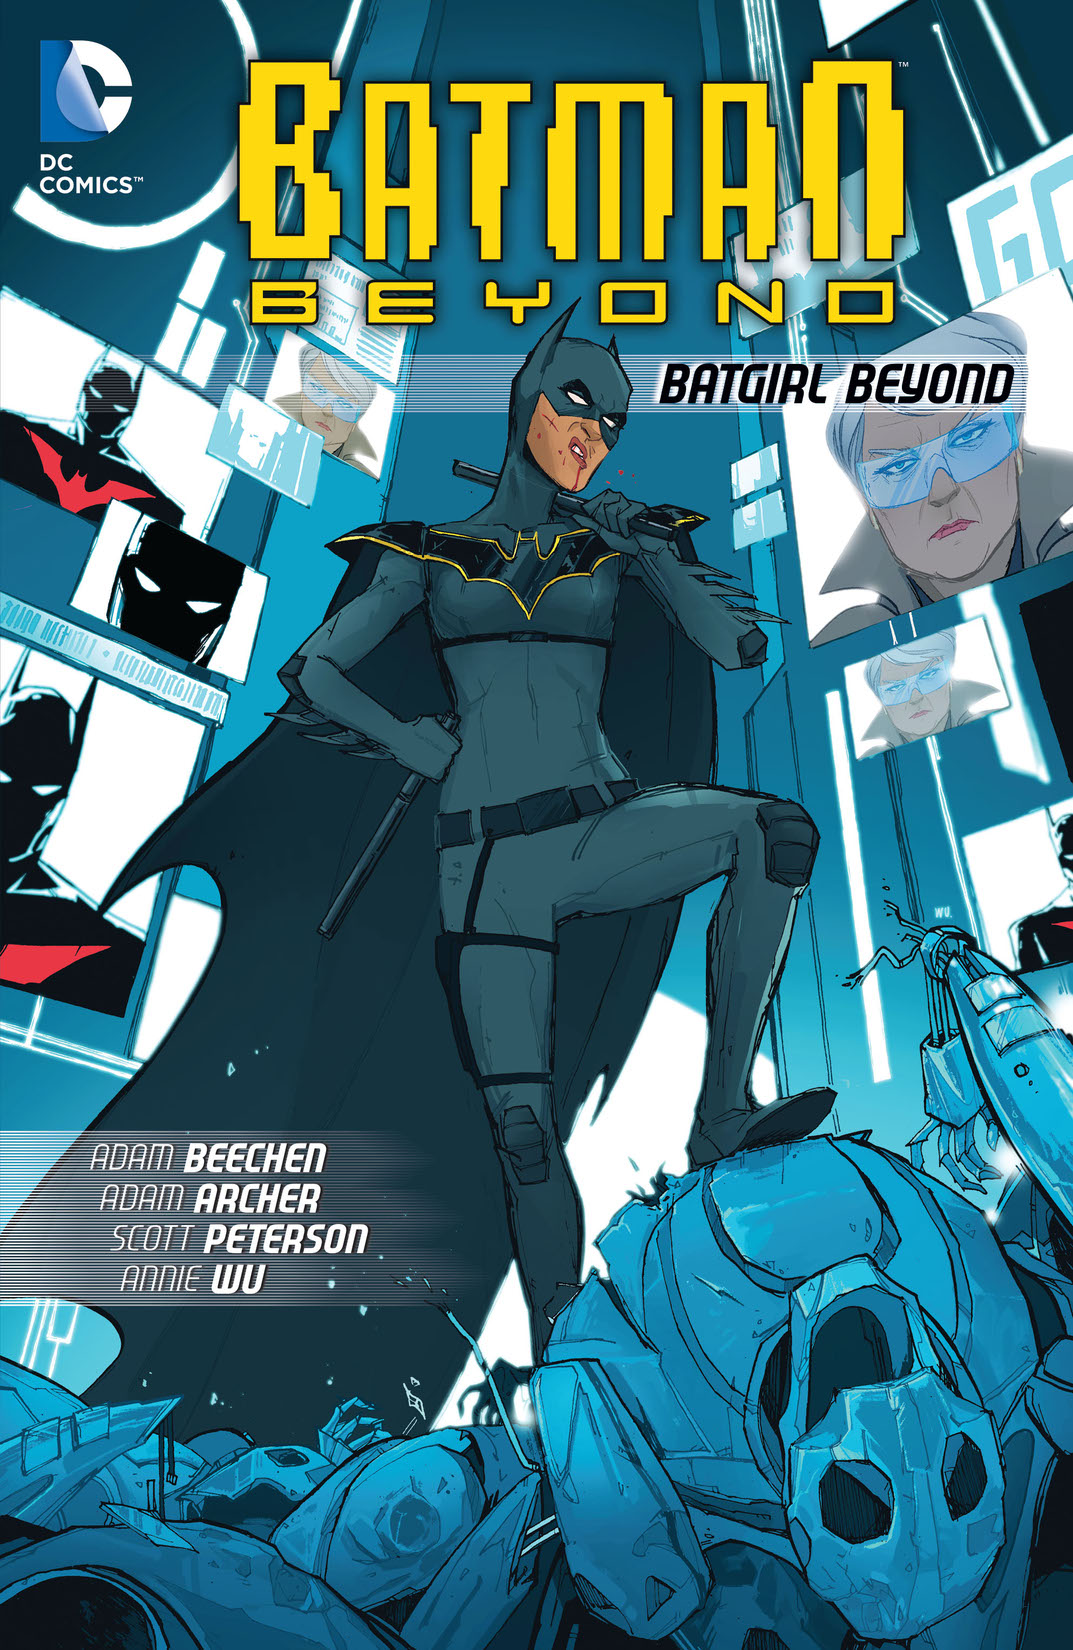 Batman Beyond: Batgirl Beyond preview images